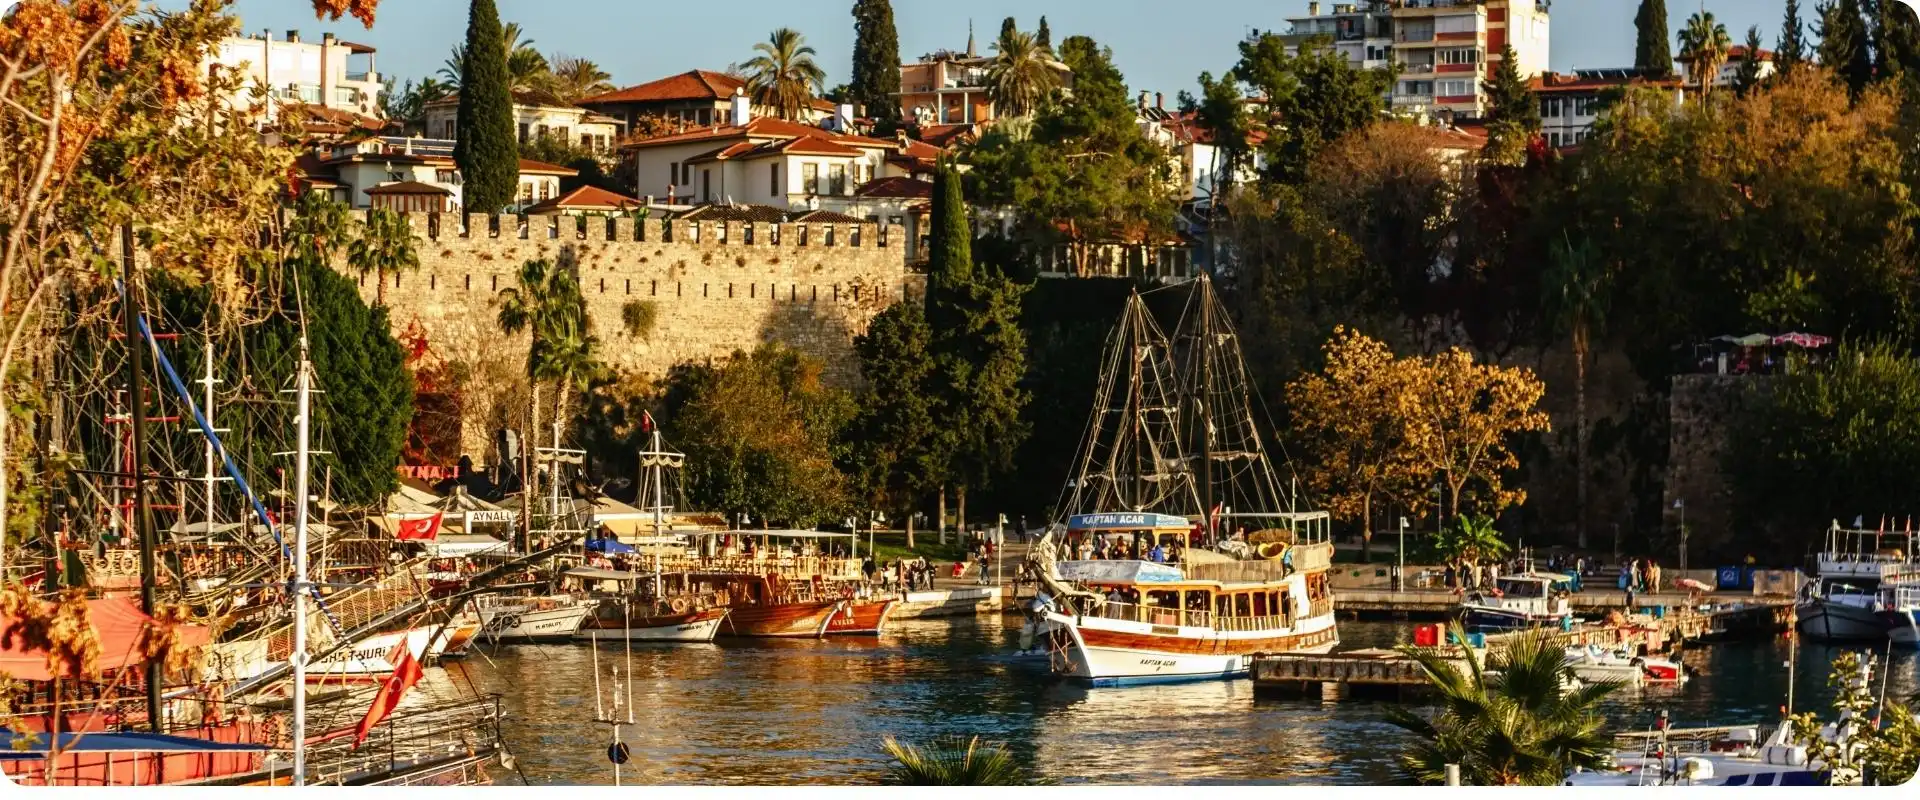 Antalya keleici charterrejse til tyrkiet flyv fra hamborg.webp